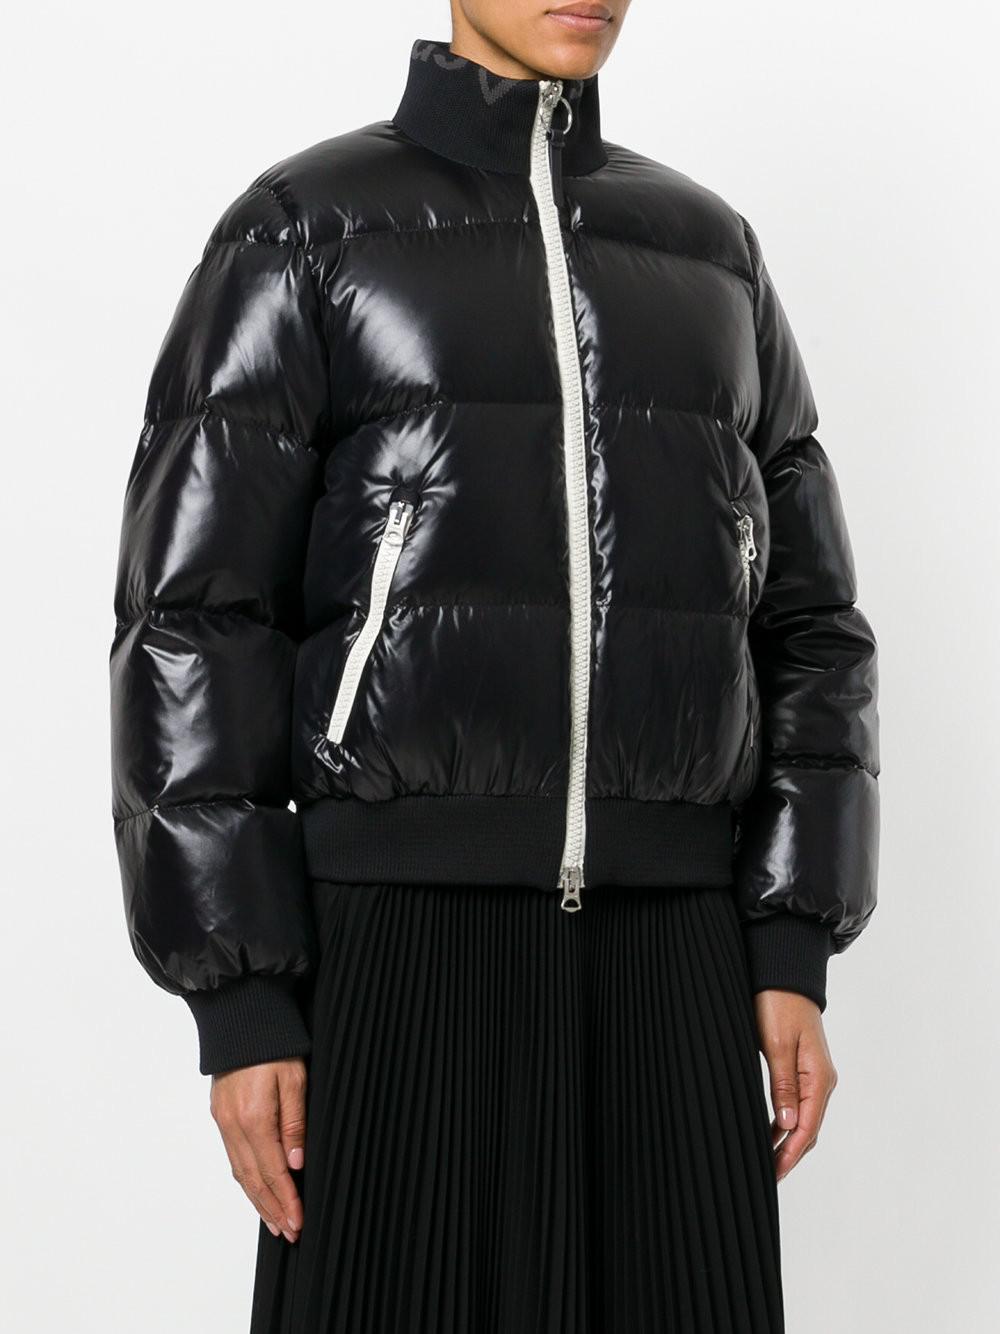 Lyst - Acne Puffer Jacket in Black